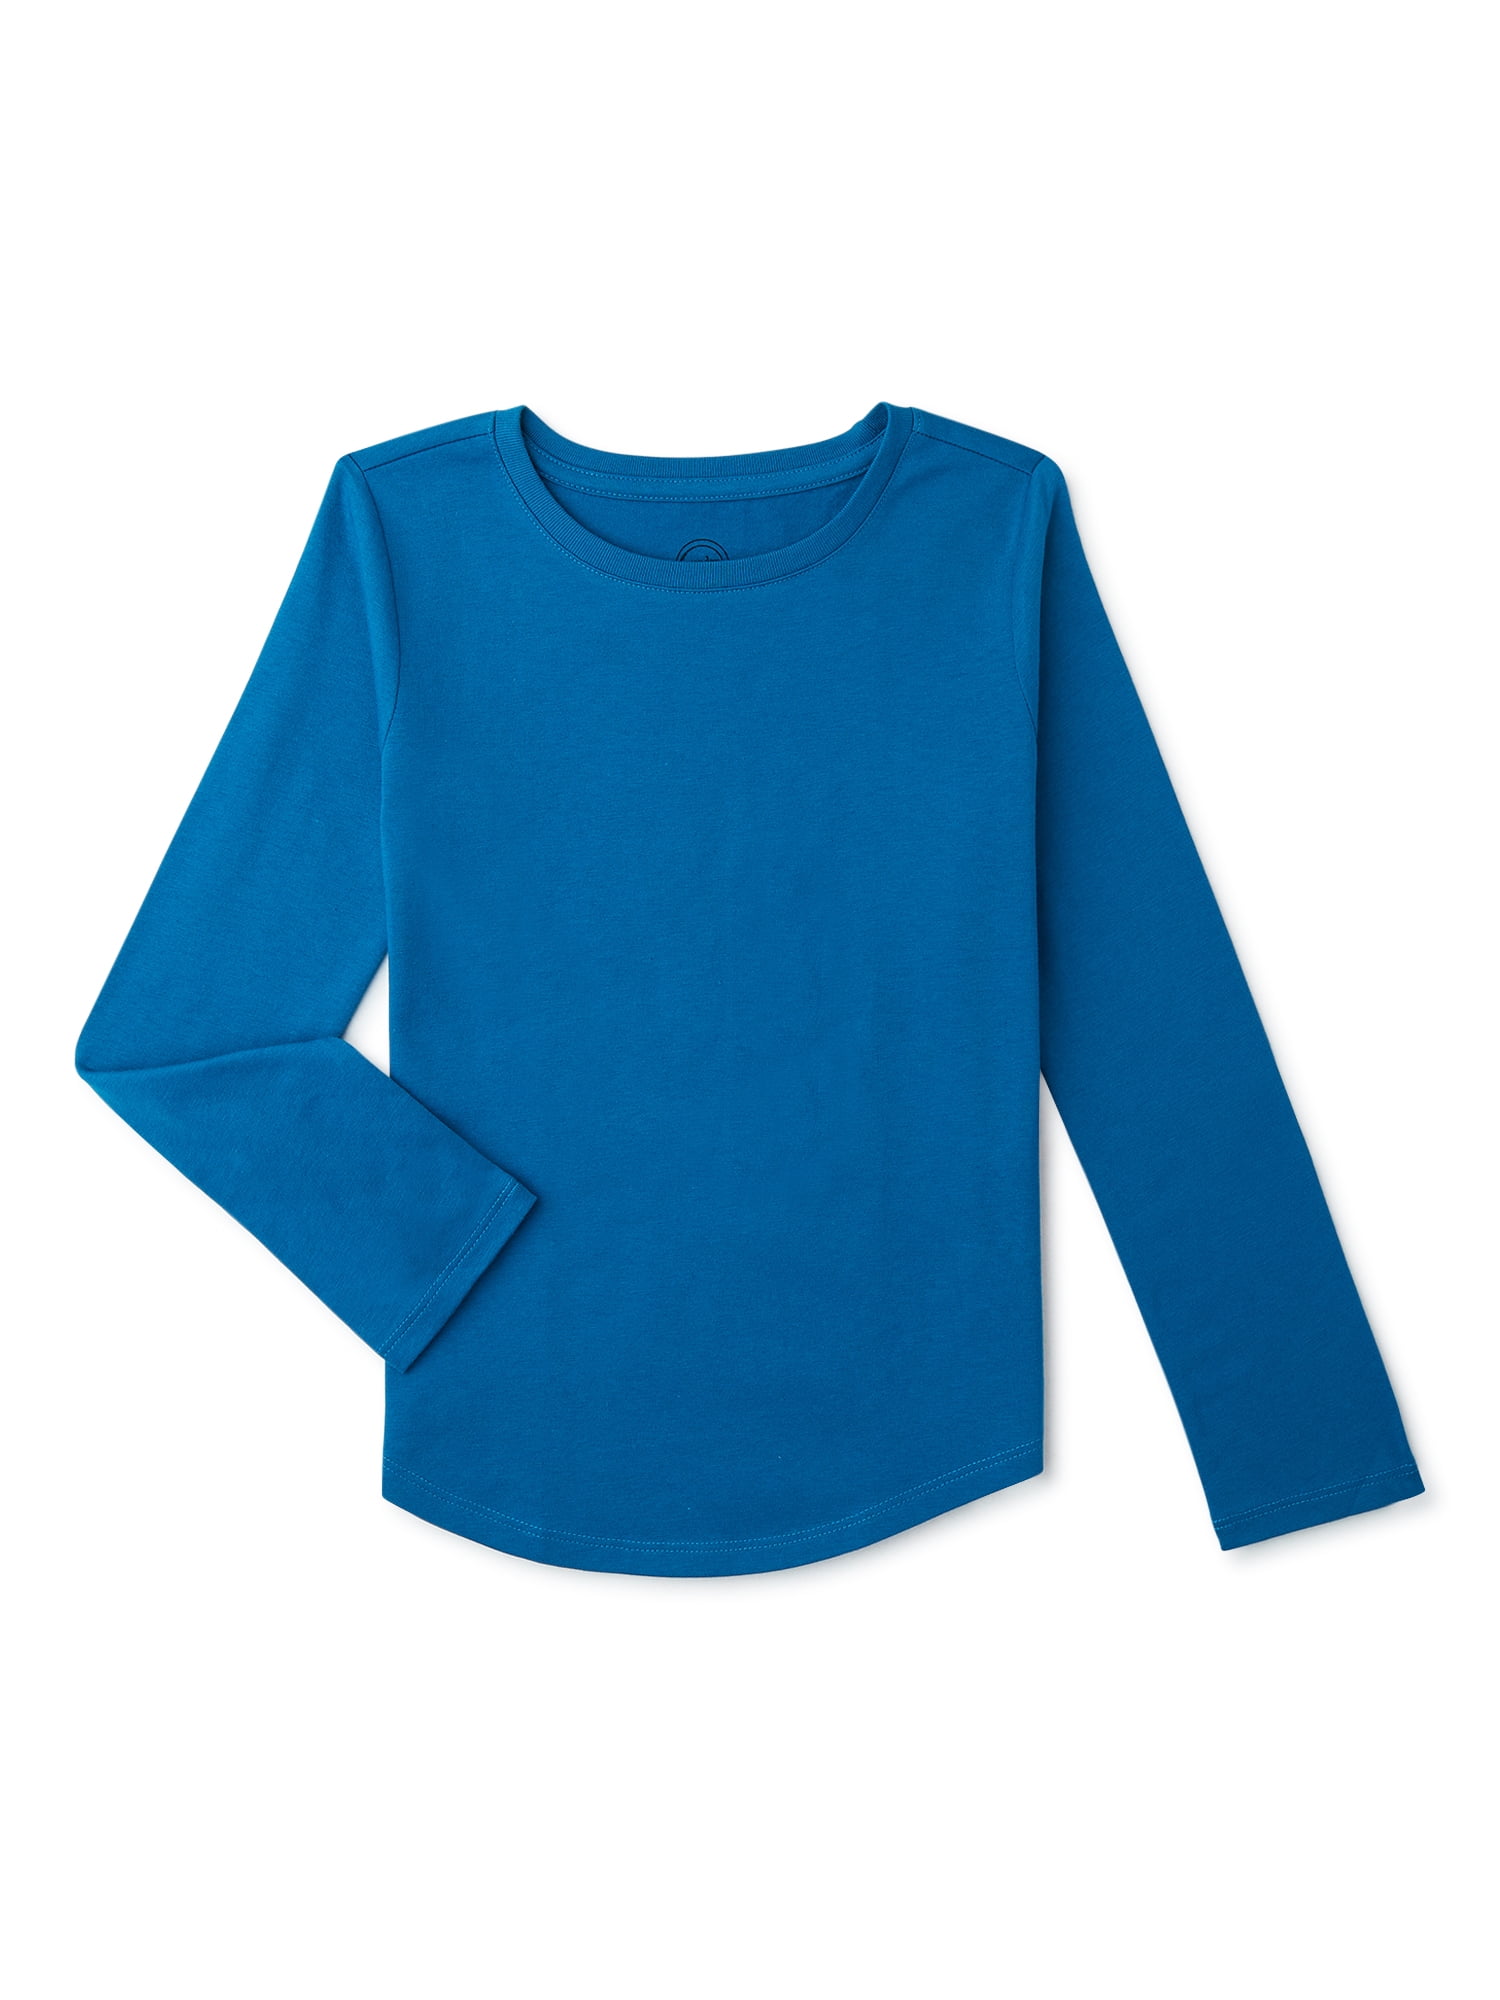 Splendid Kids Toddlers Button T Shirt Teal Aqua Green Blue Heathered Cute 